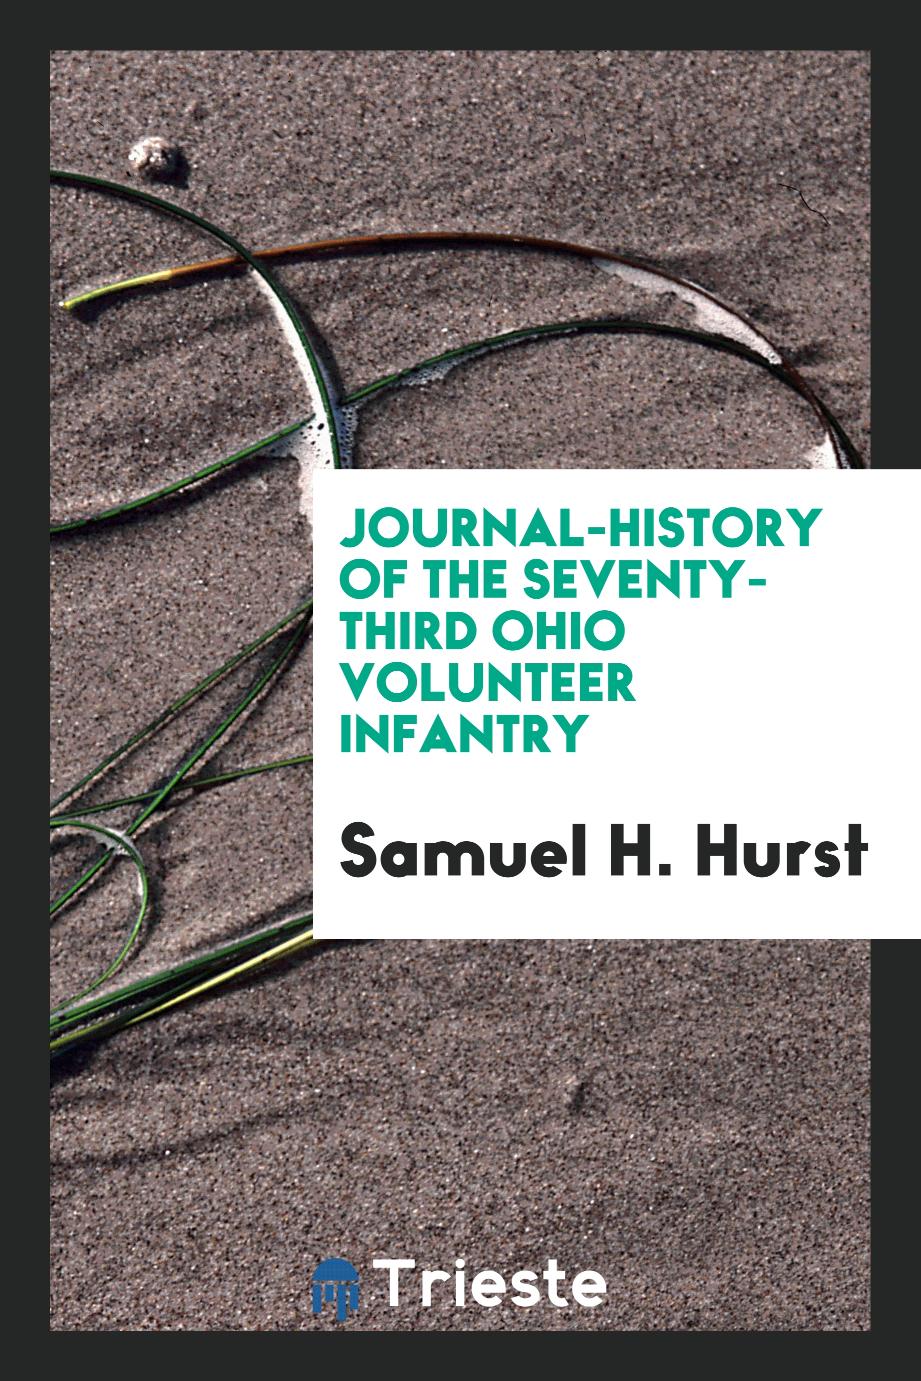 Journal-history of the Seventy-third Ohio Volunteer Infantry